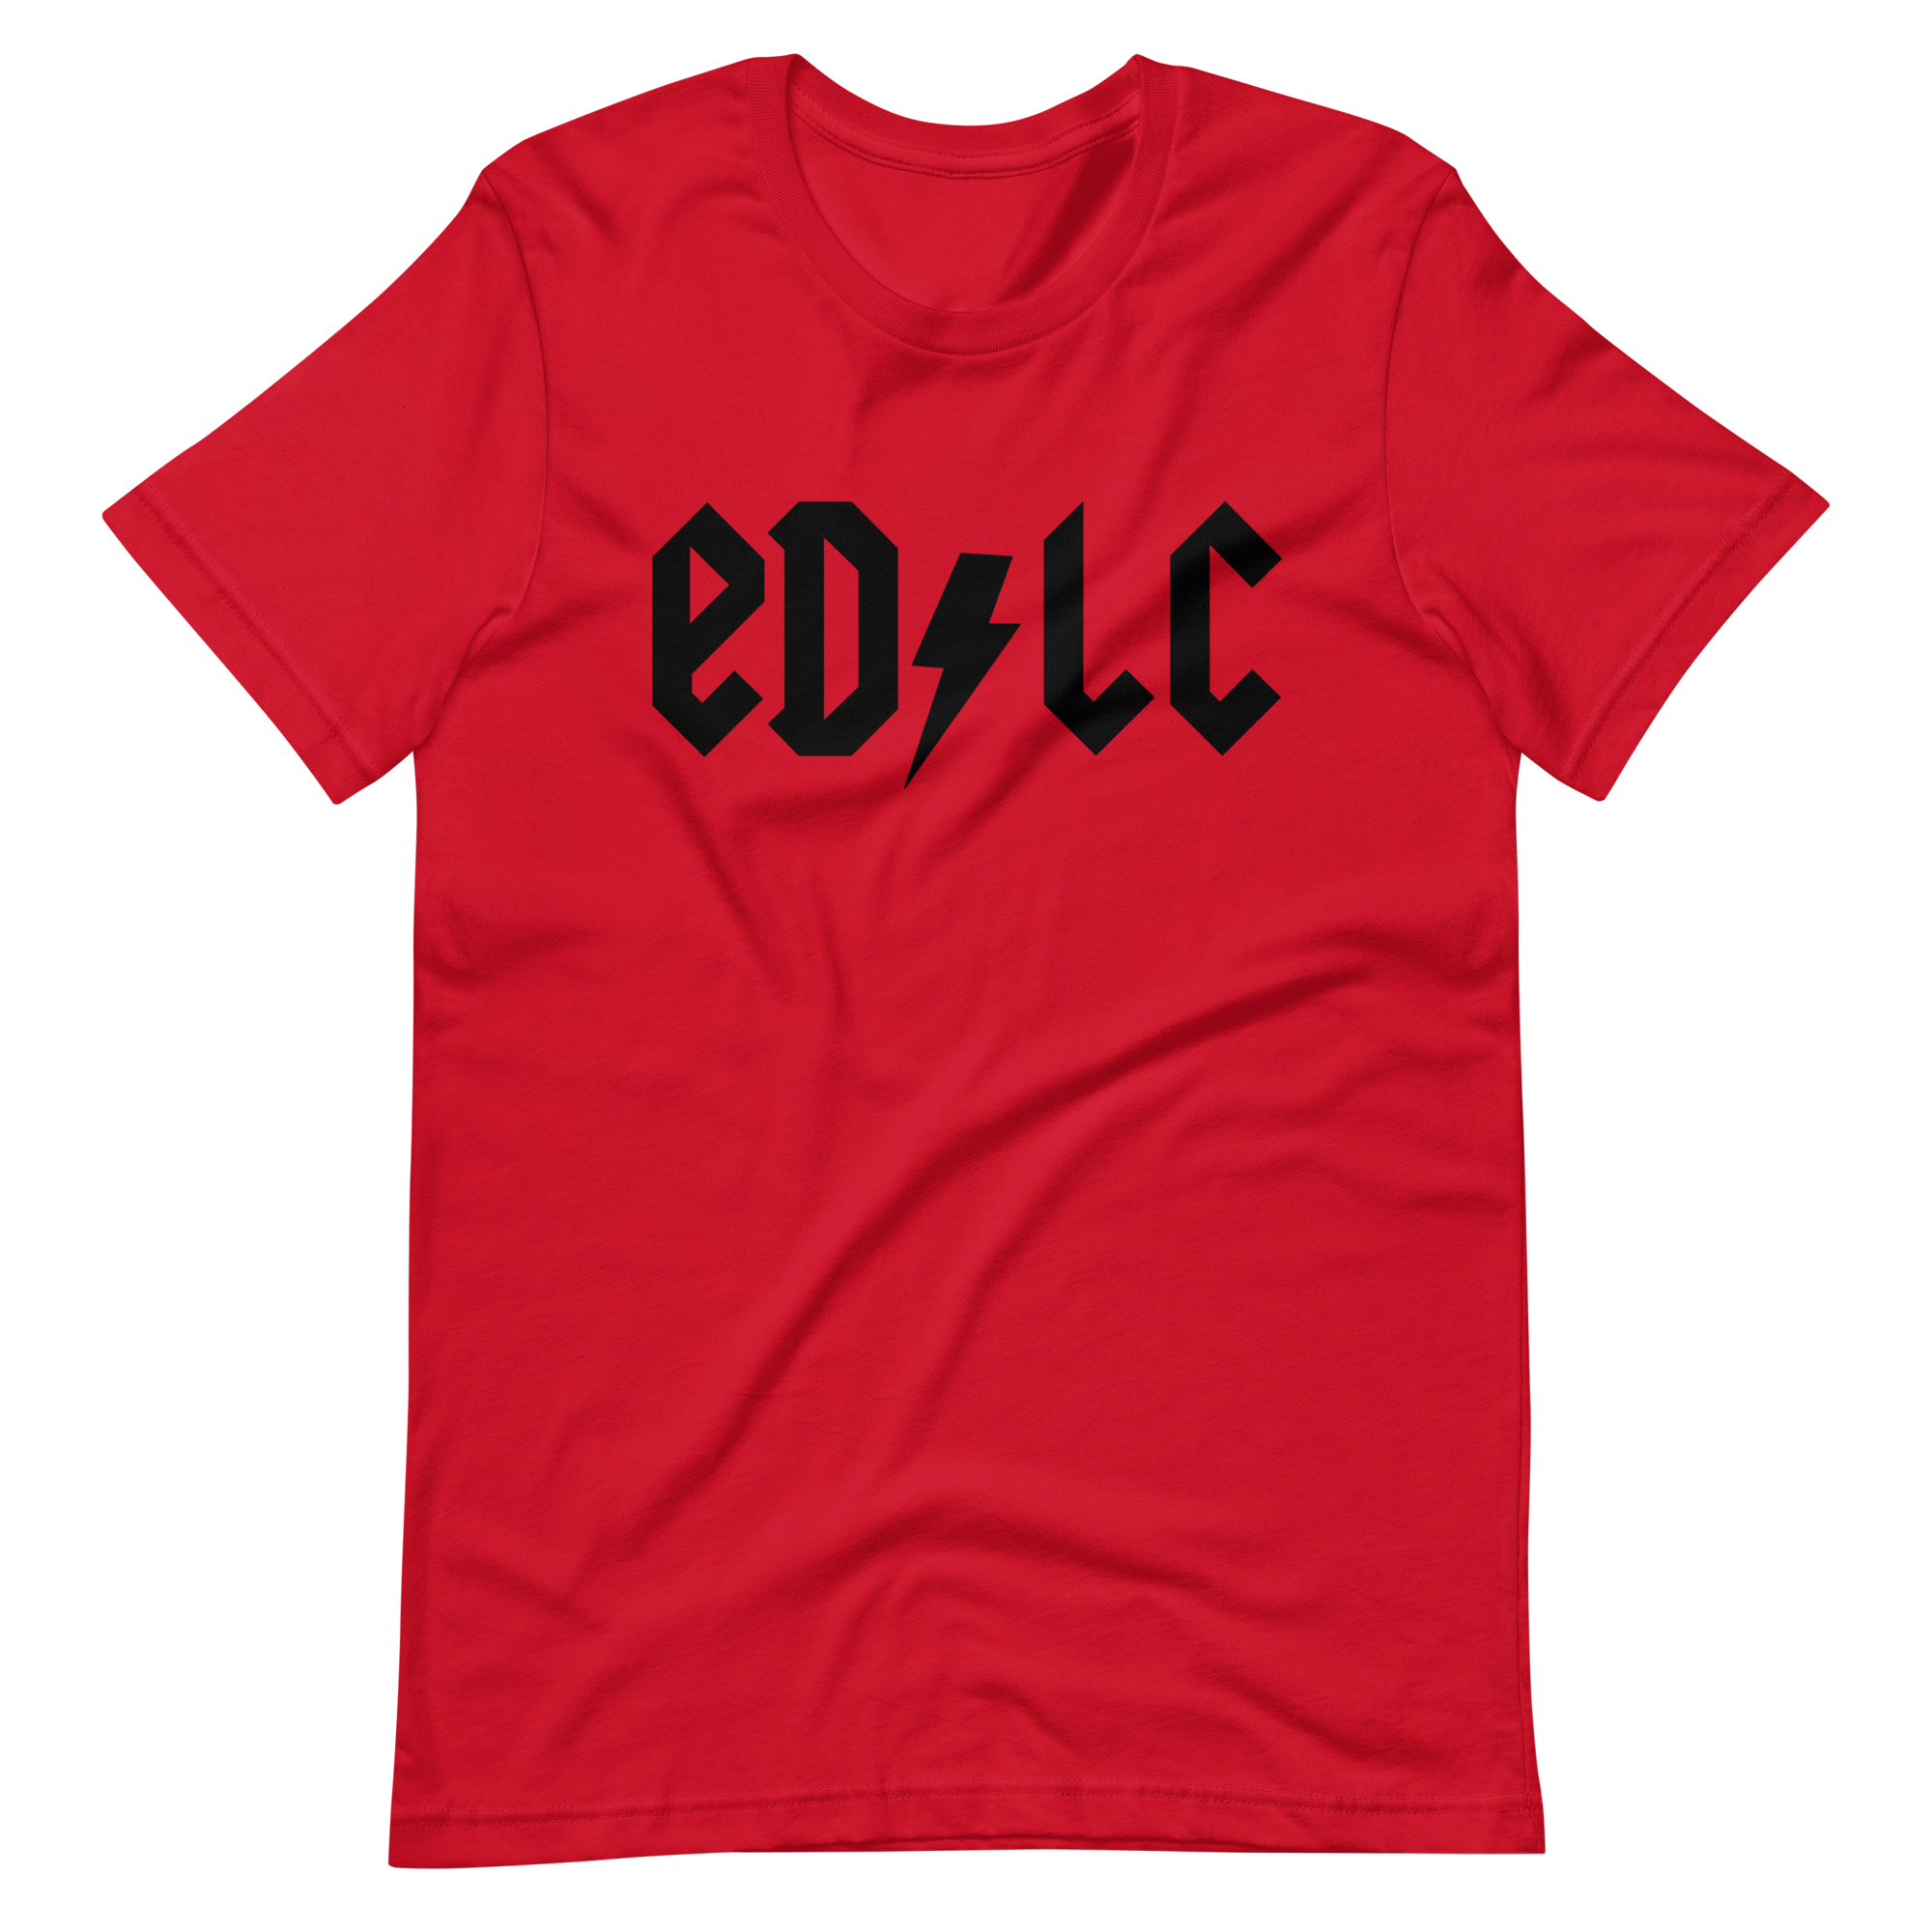 EDLC